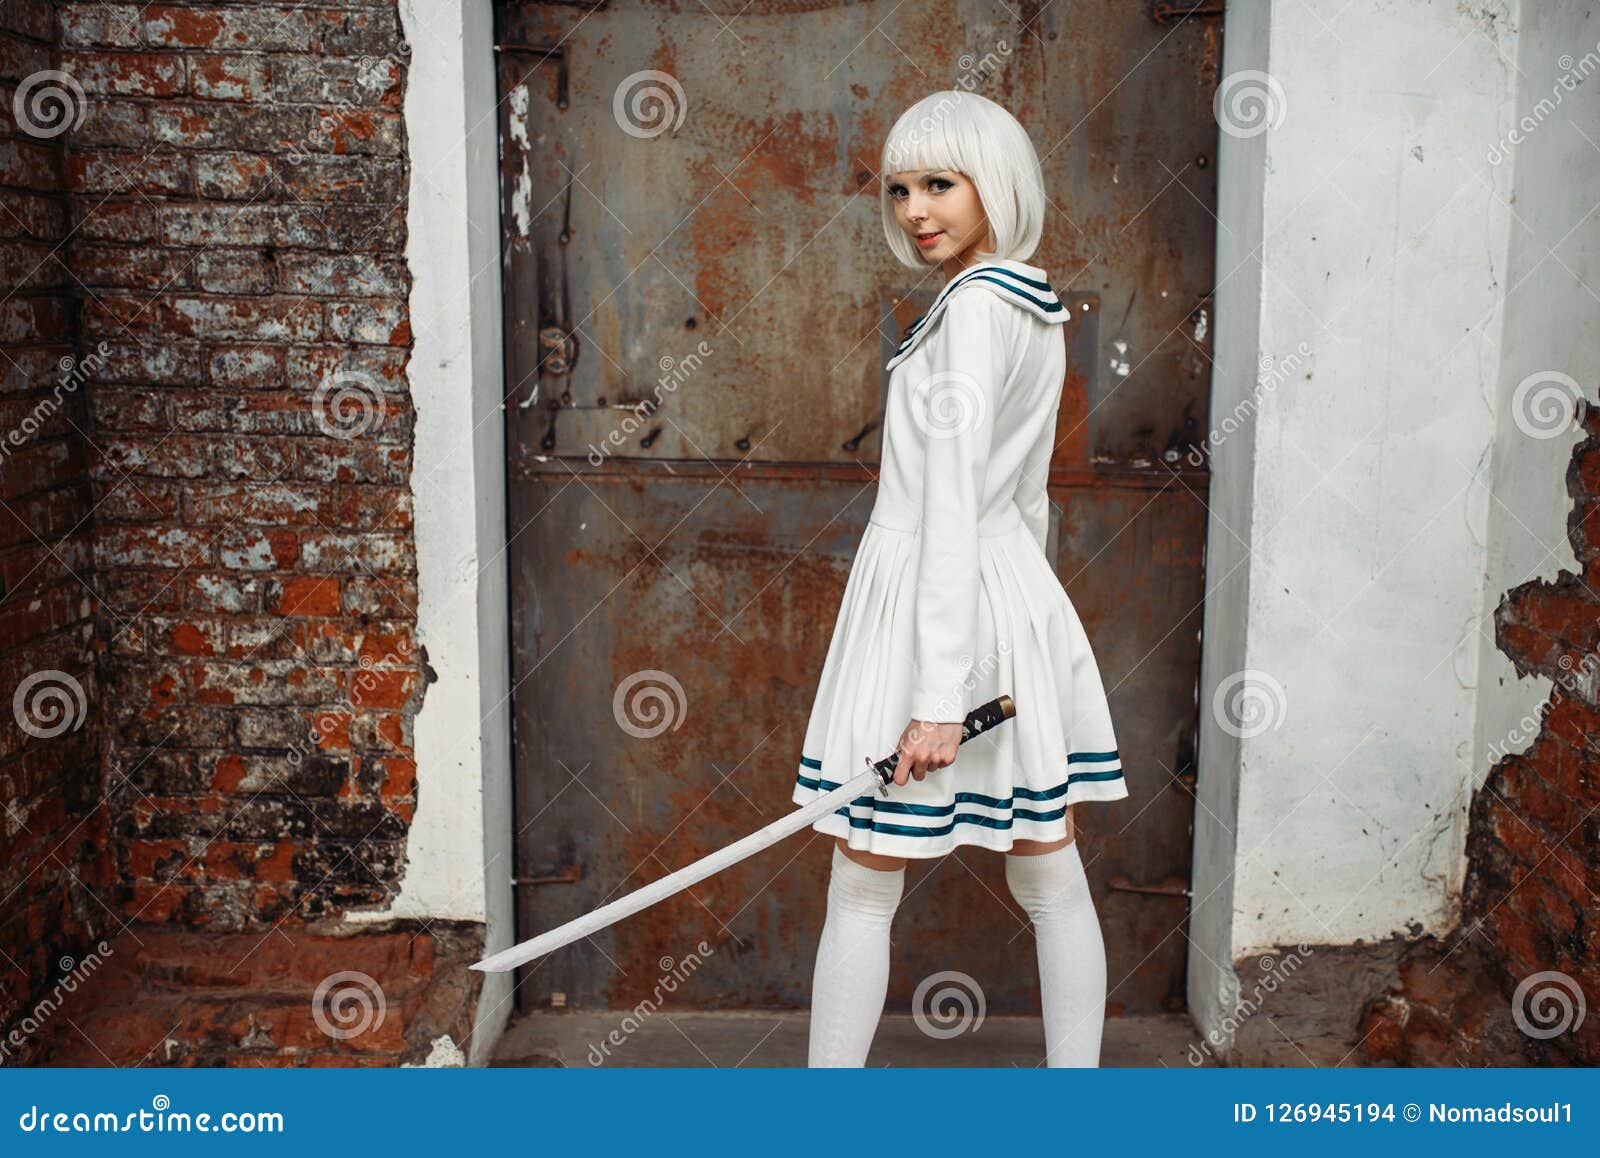 Kawaii anime girl with Sword created with generative AI technology